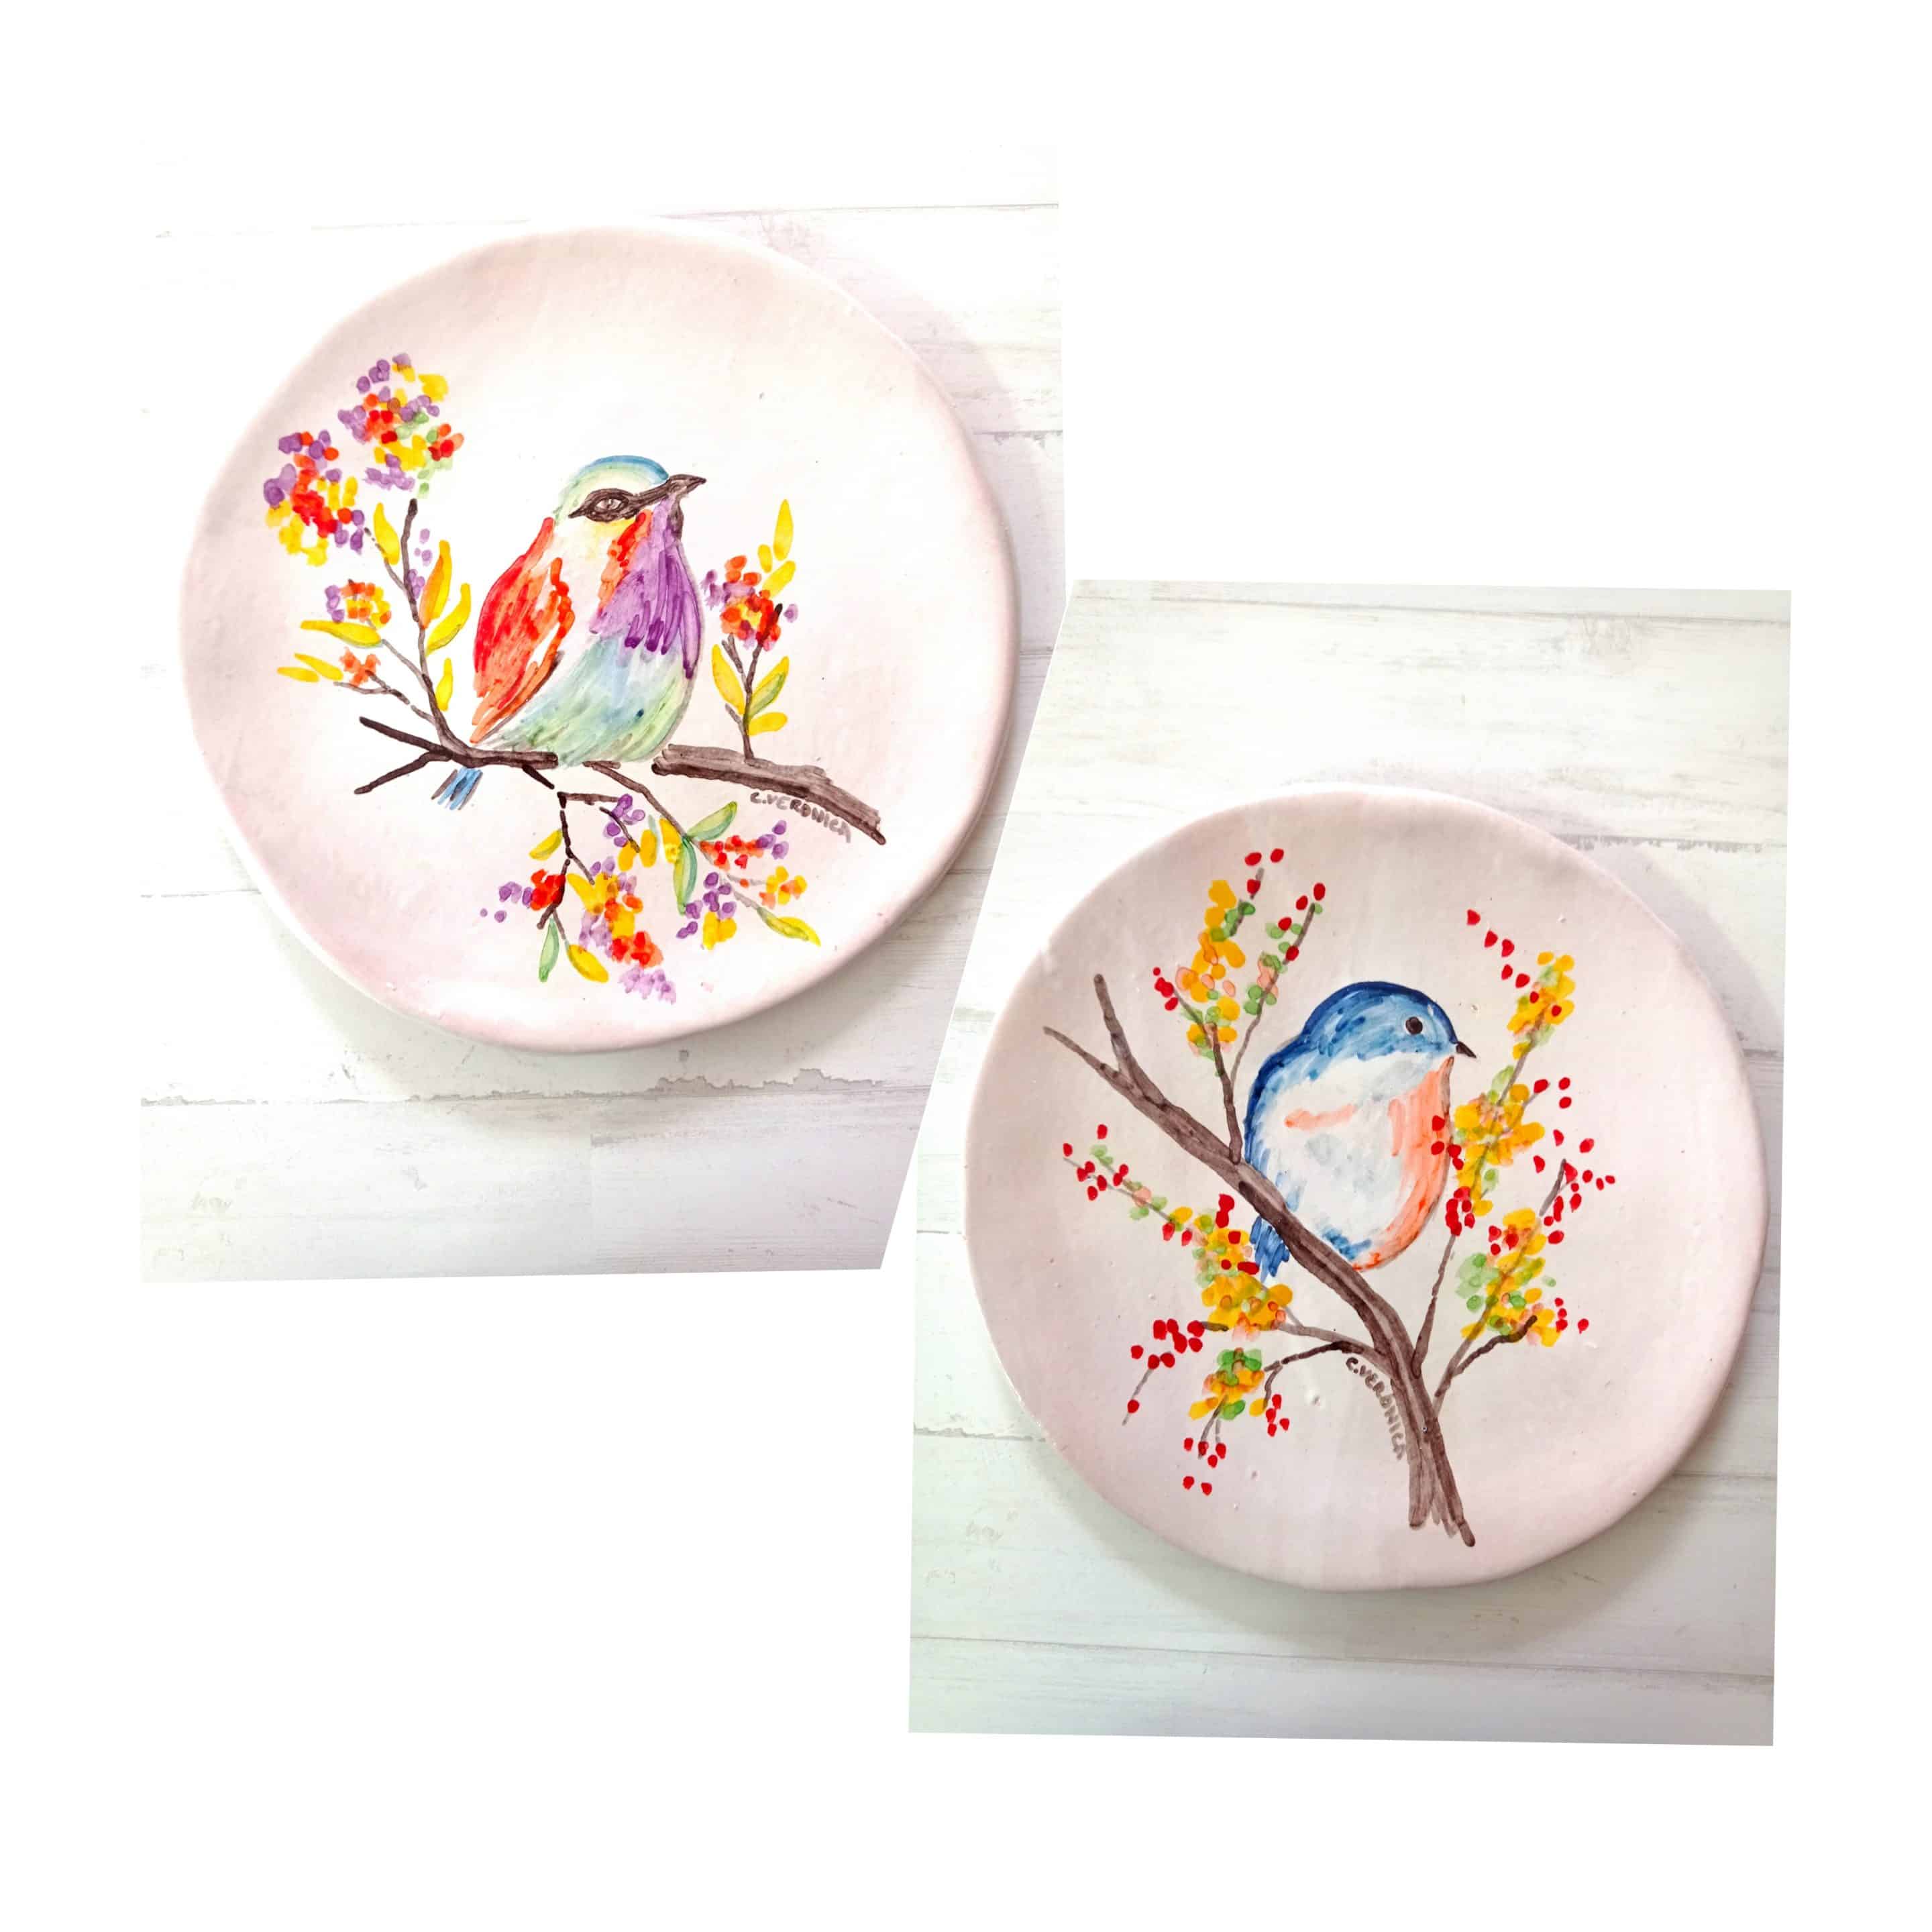 platos de cerámica, platos con pájaros, platos rústicos, platos decorativos